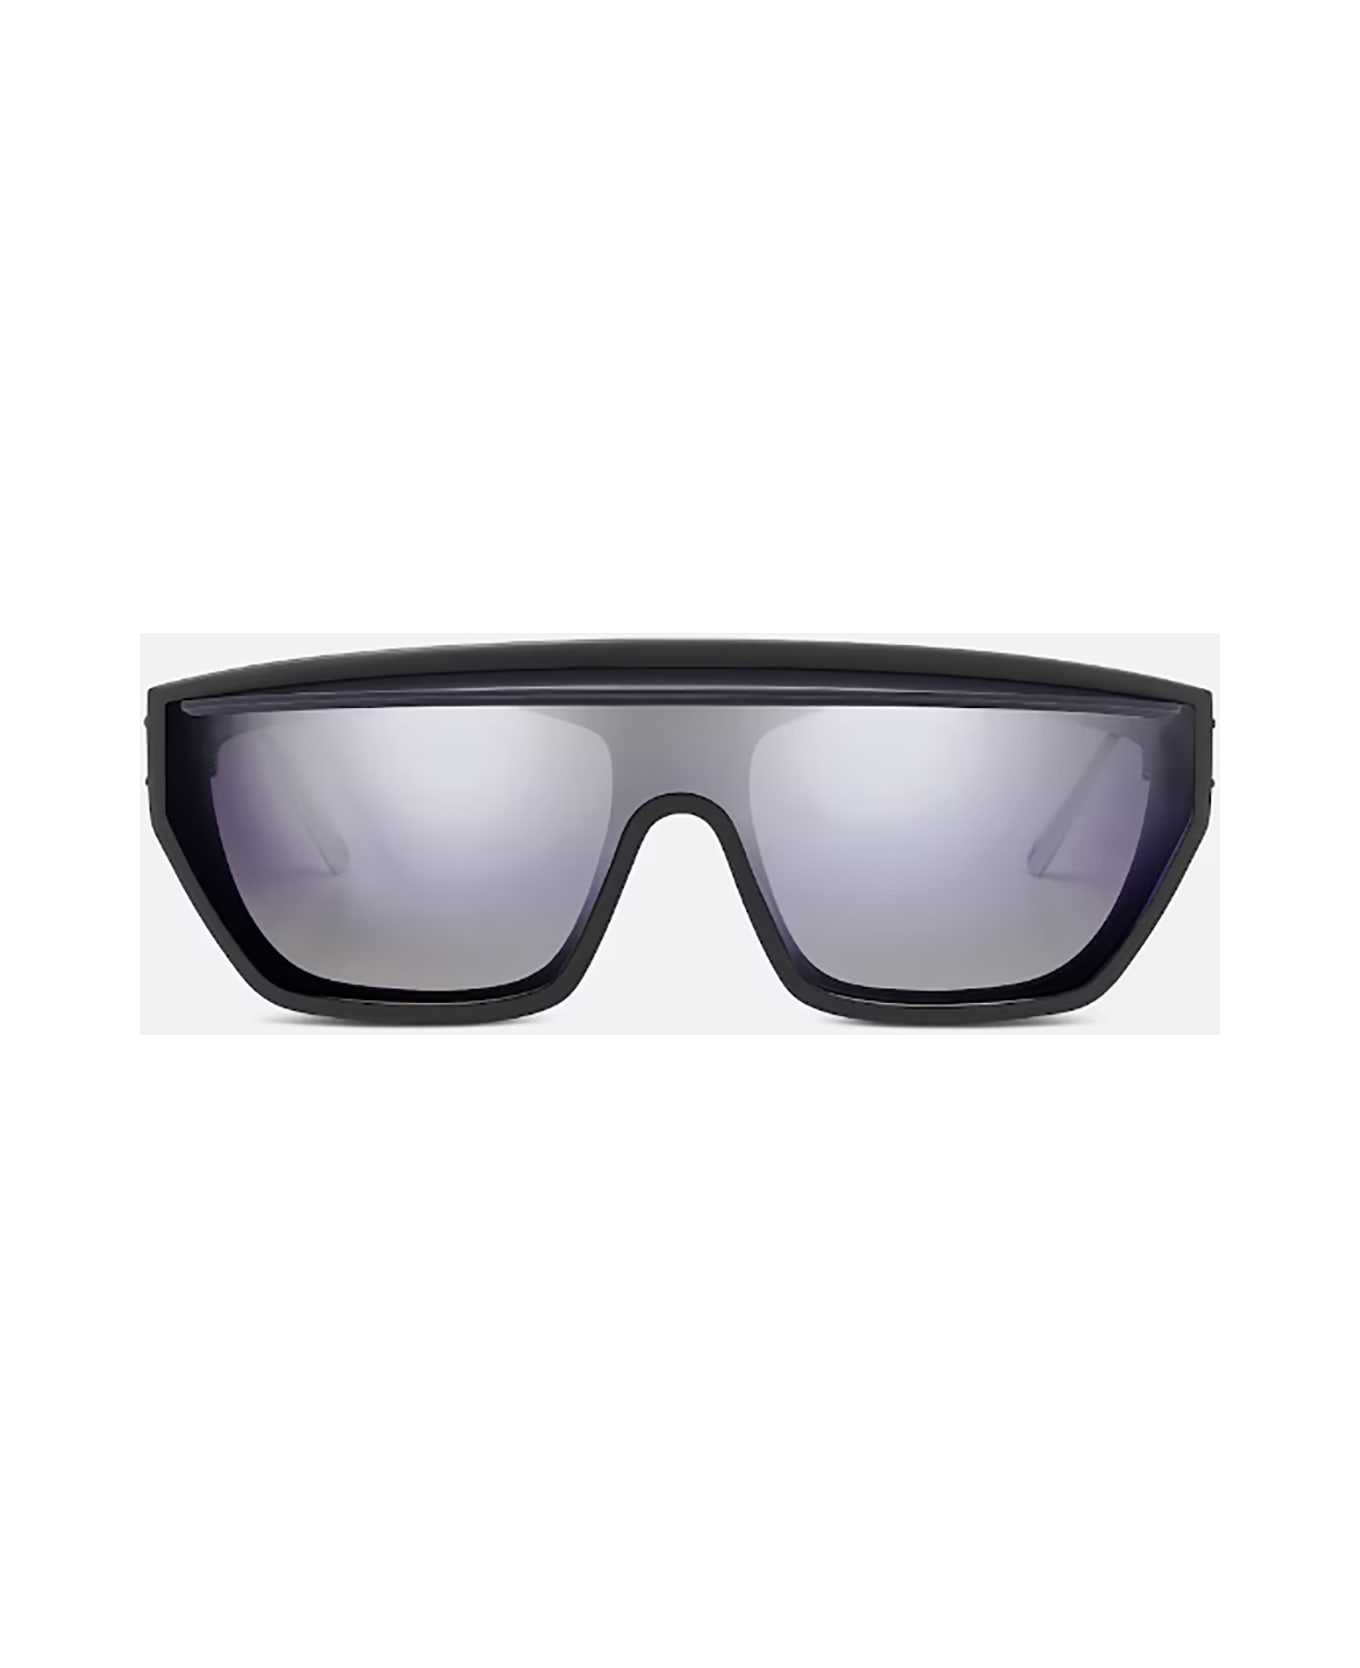 Dior Eyewear DIORCLUB M7U Sunglasses サングラス